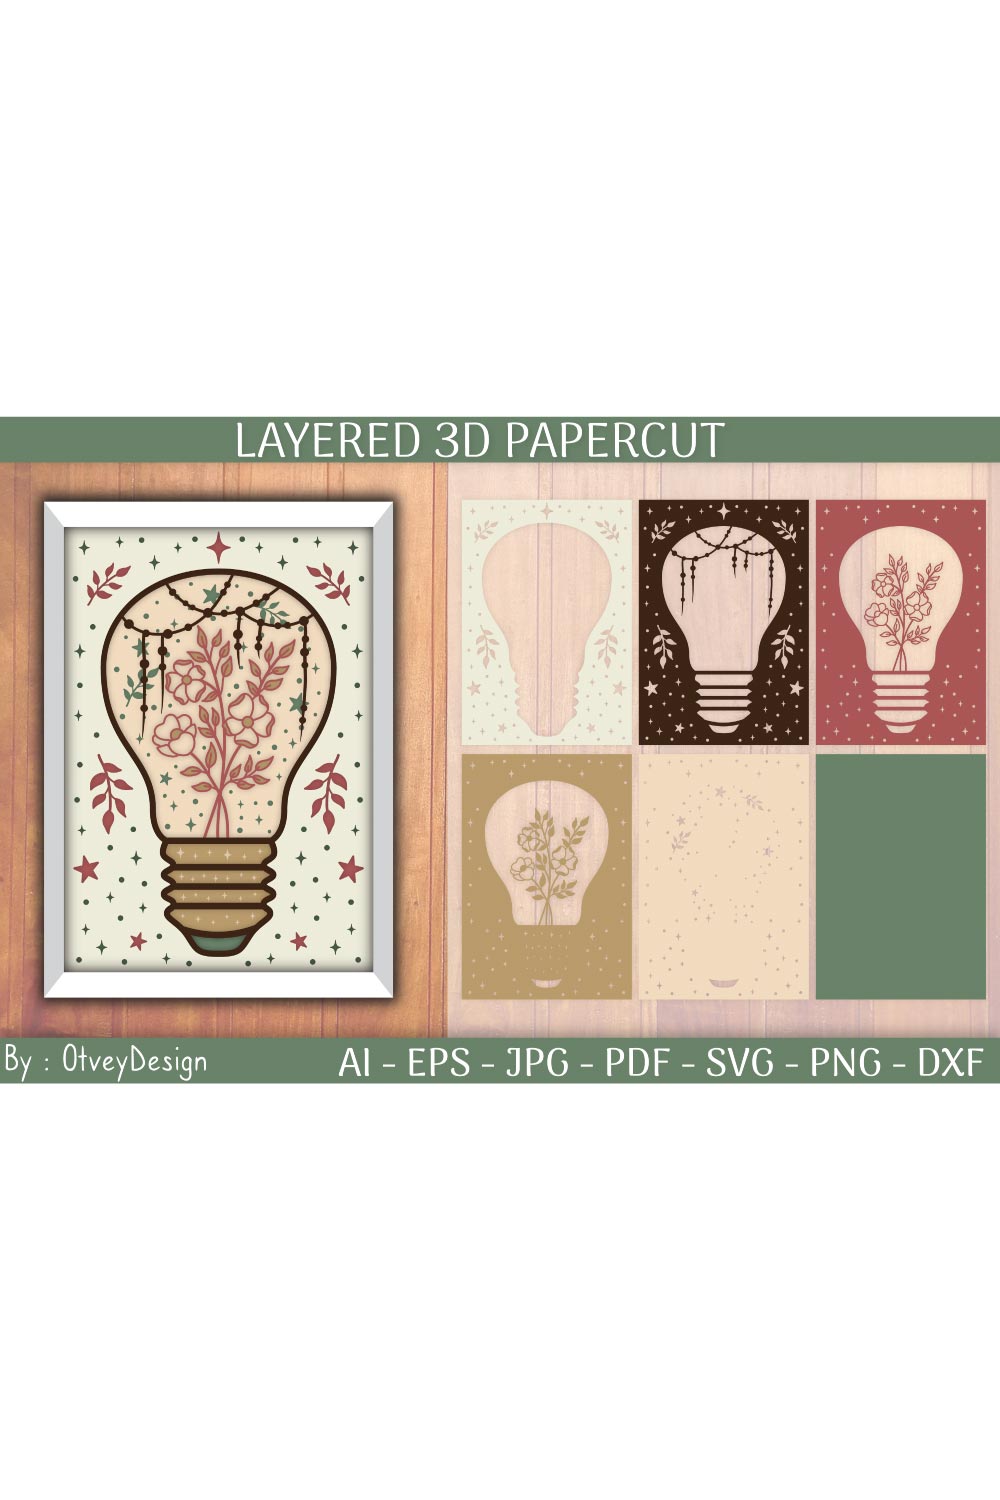 Mystical light bulb 3D Layered Papercut pinterest preview image.